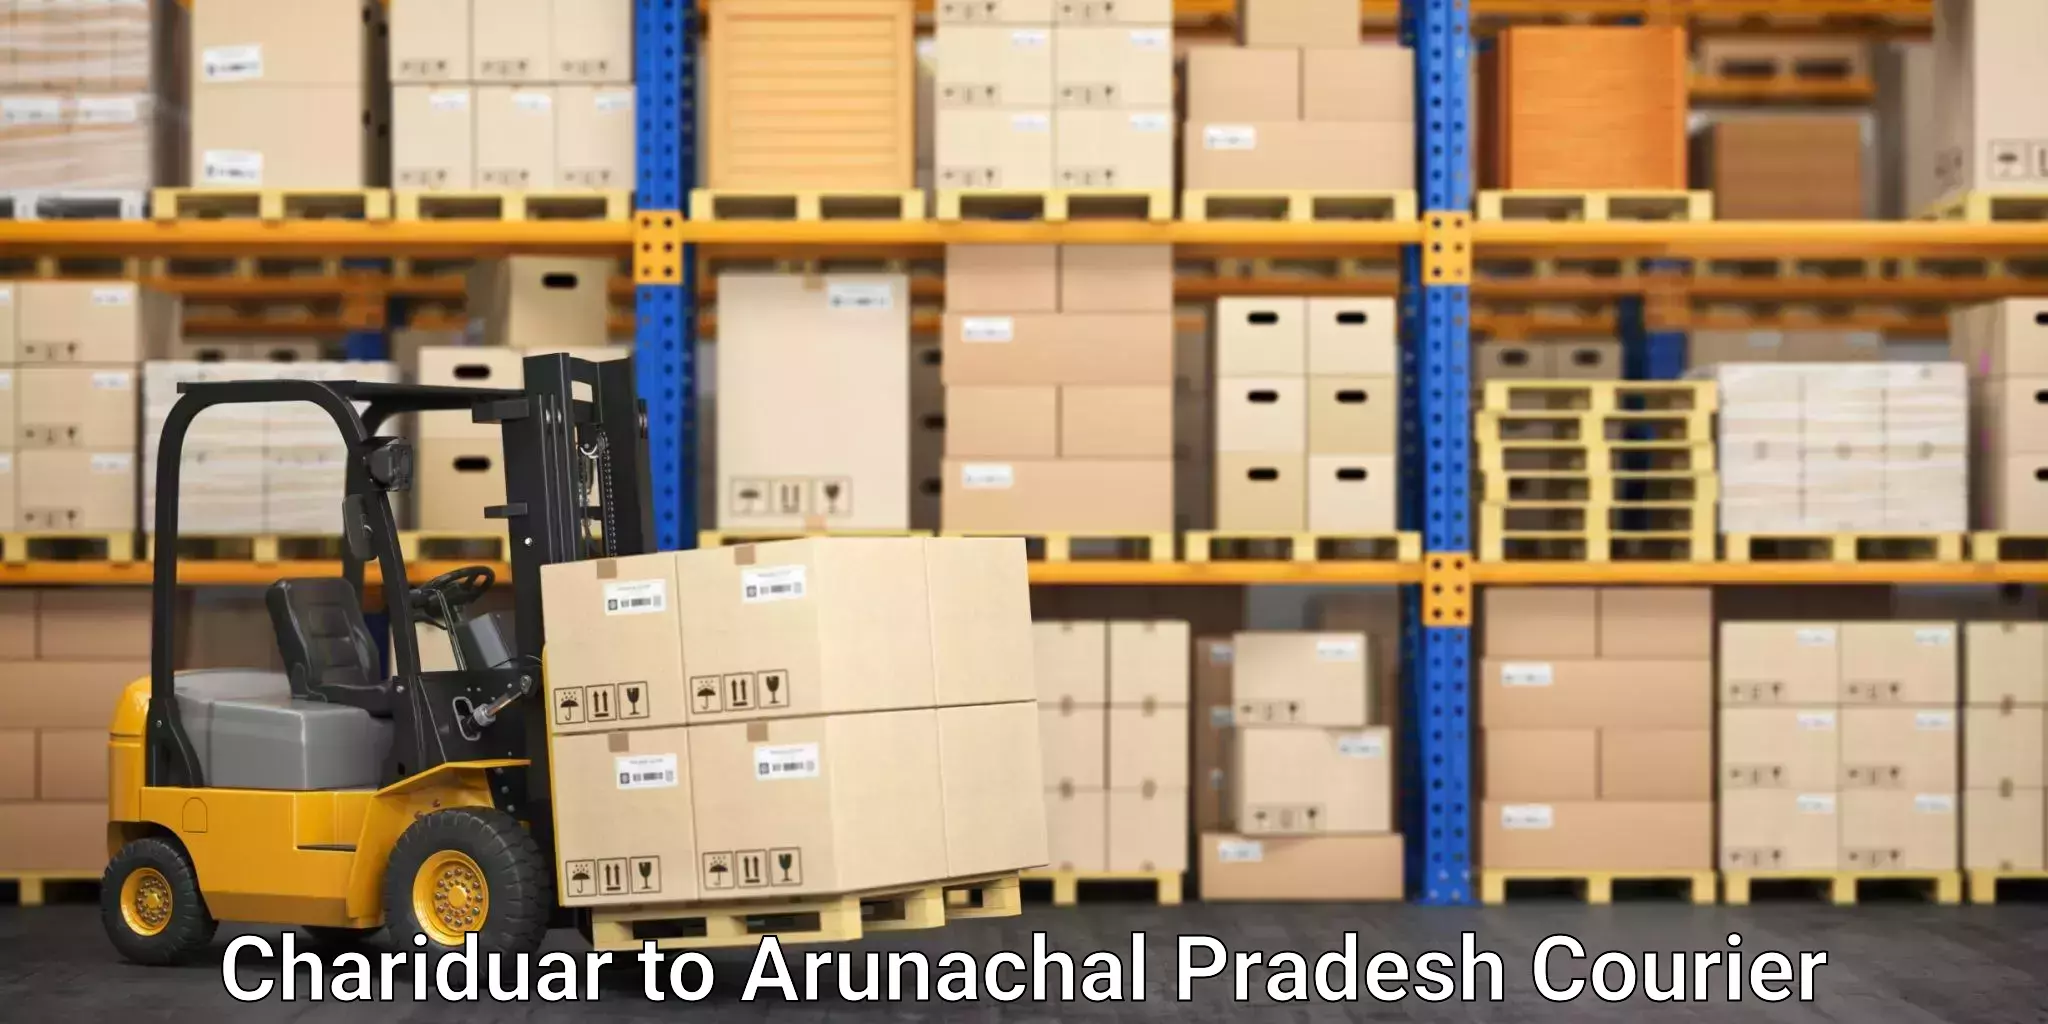 Streamlined delivery processes Chariduar to Arunachal Pradesh